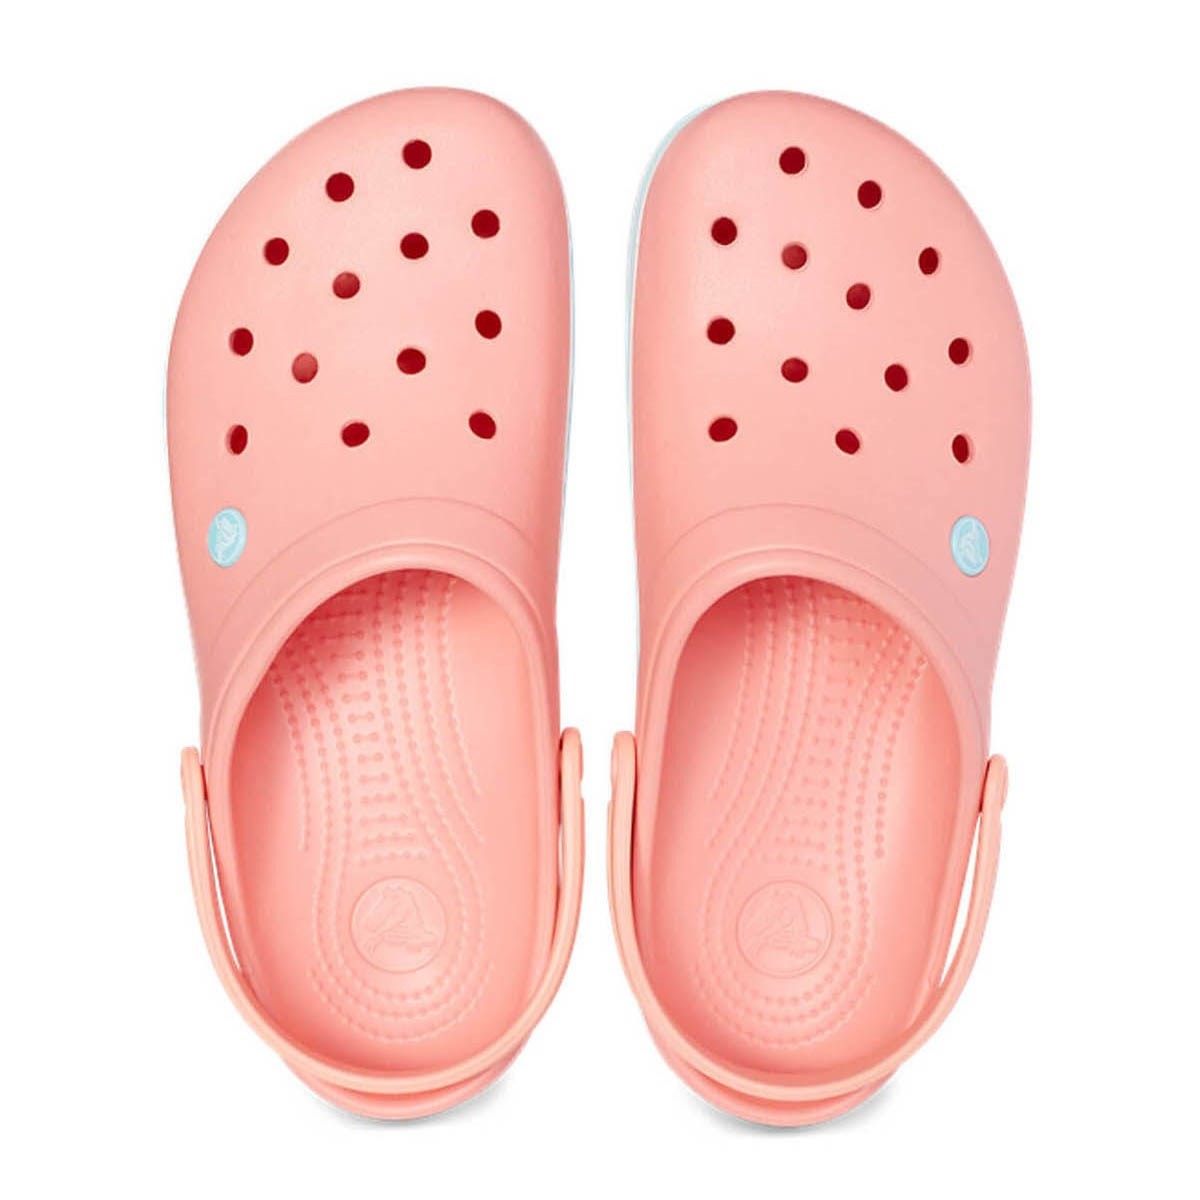 Crocs Unisex Sandalet 11016 Melon/Ice Blue